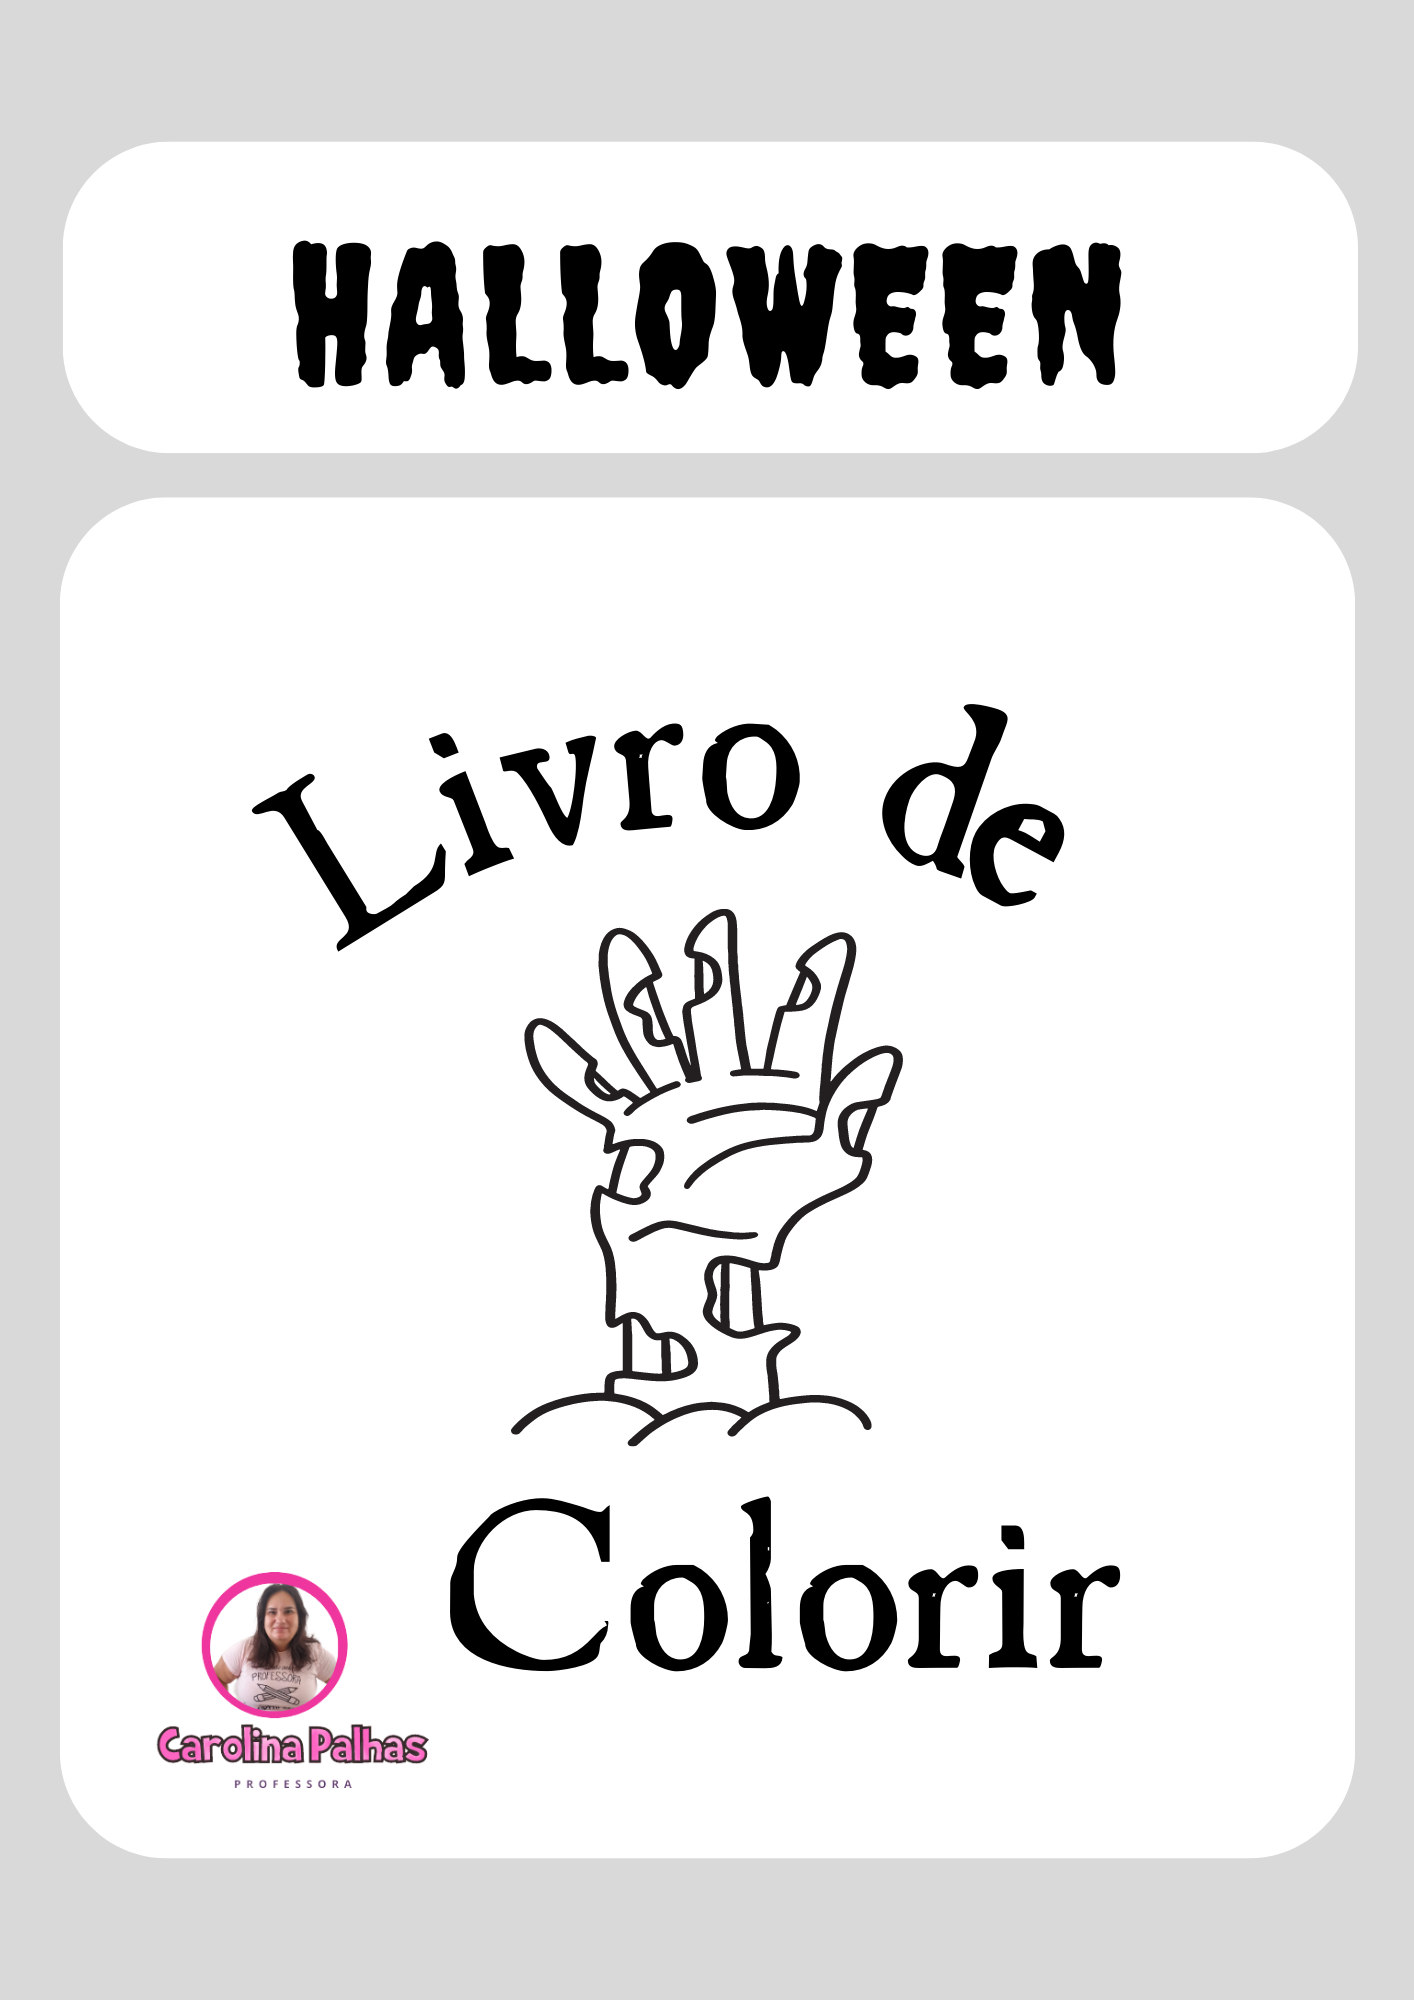 Desenhos de Halloween para colorir, jogos de pintar e imprimir